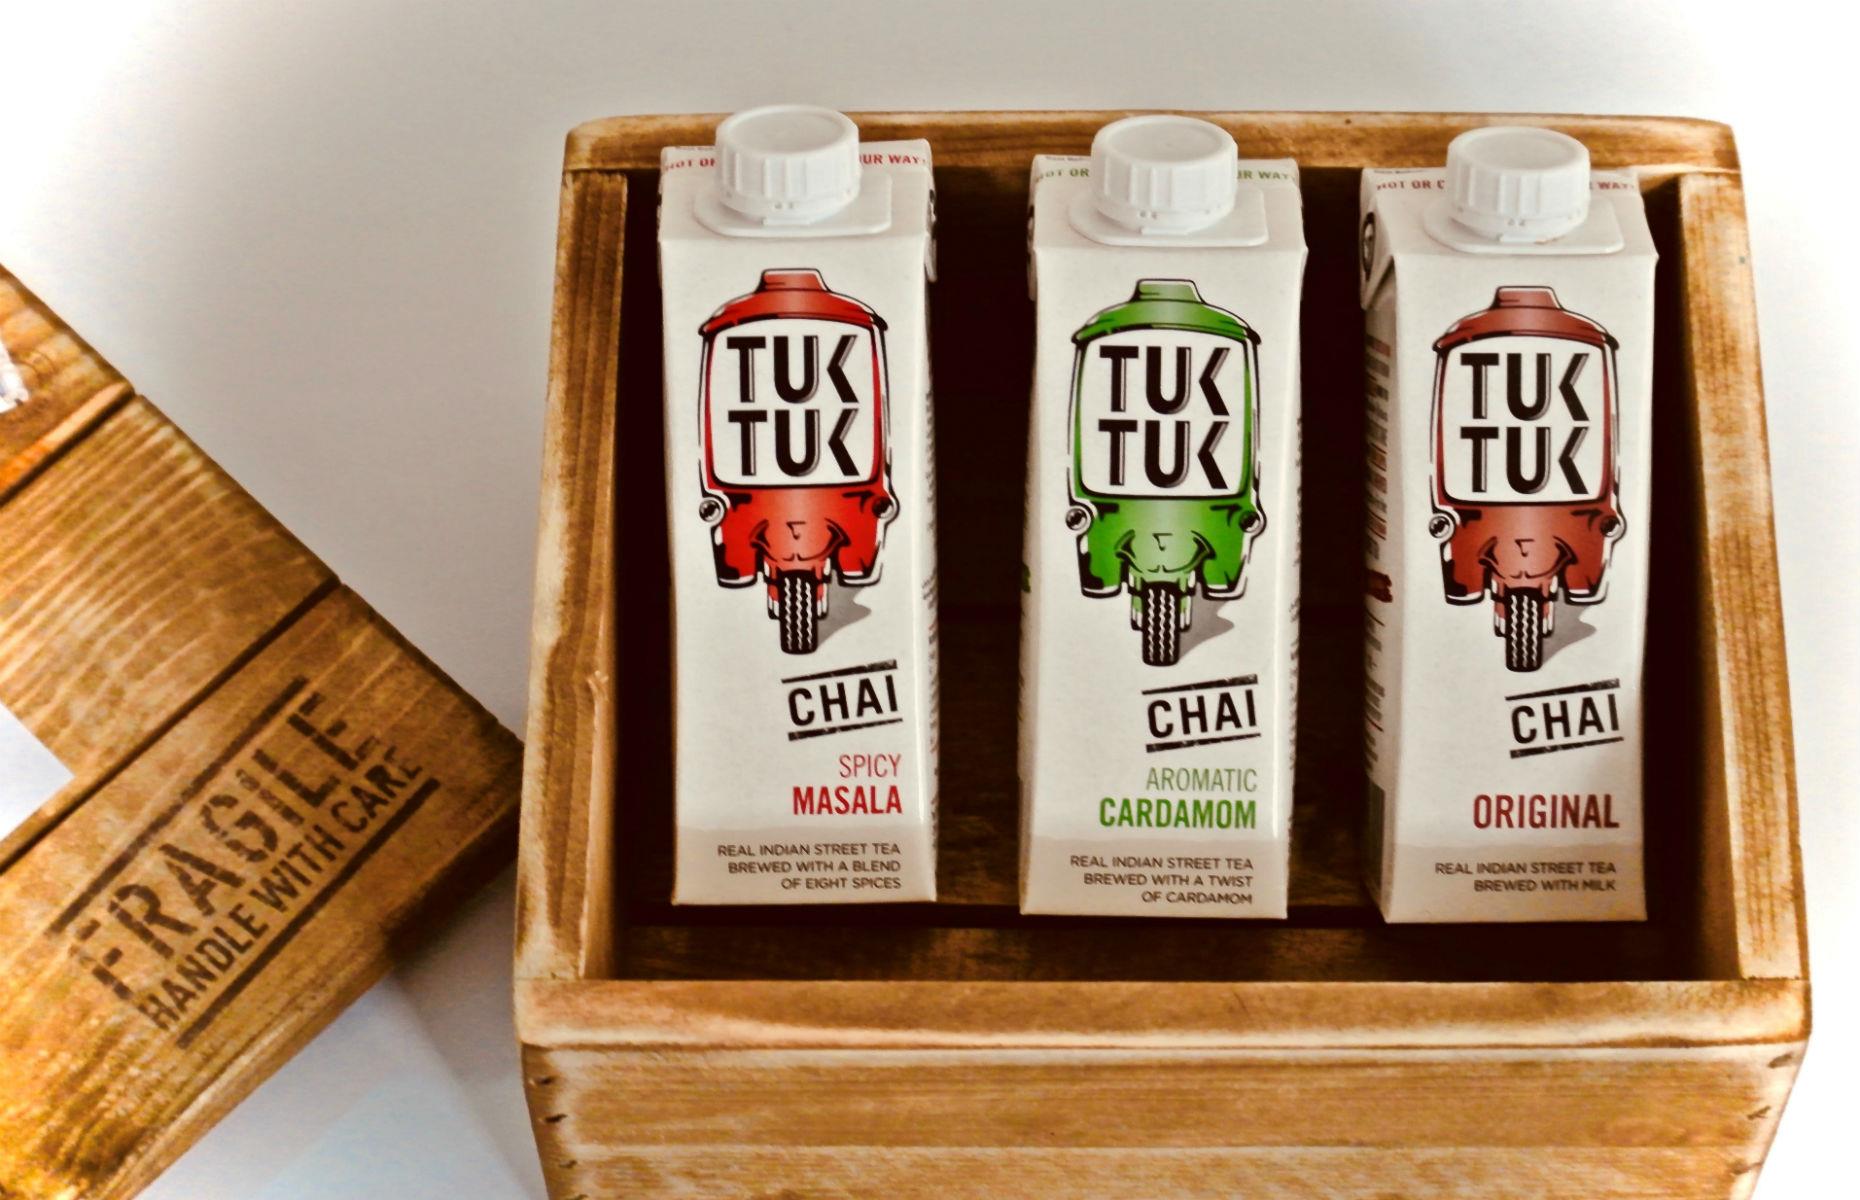 Tuk Tuk Chai teas became Rupesh's biggest venture to date